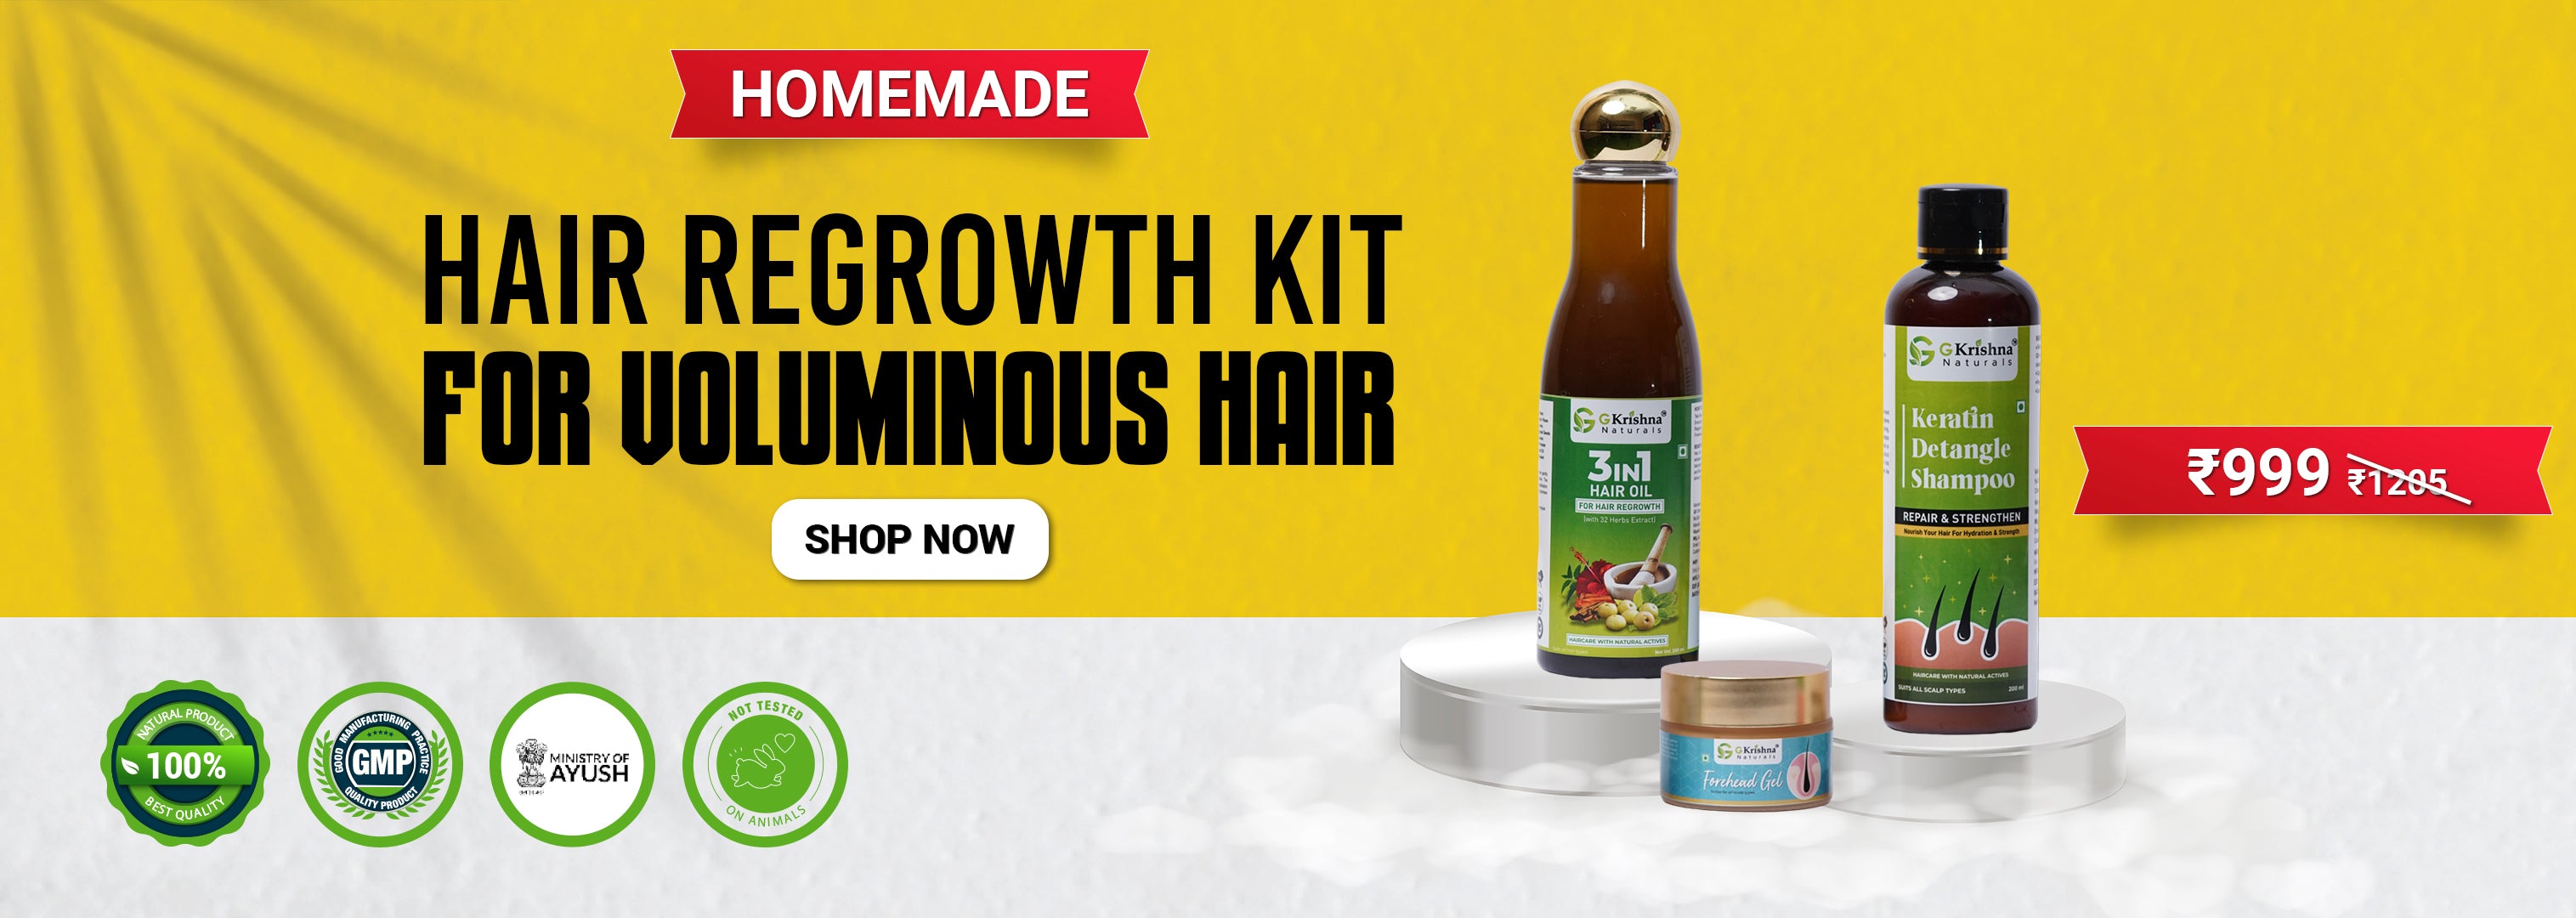 hair regrowth kit